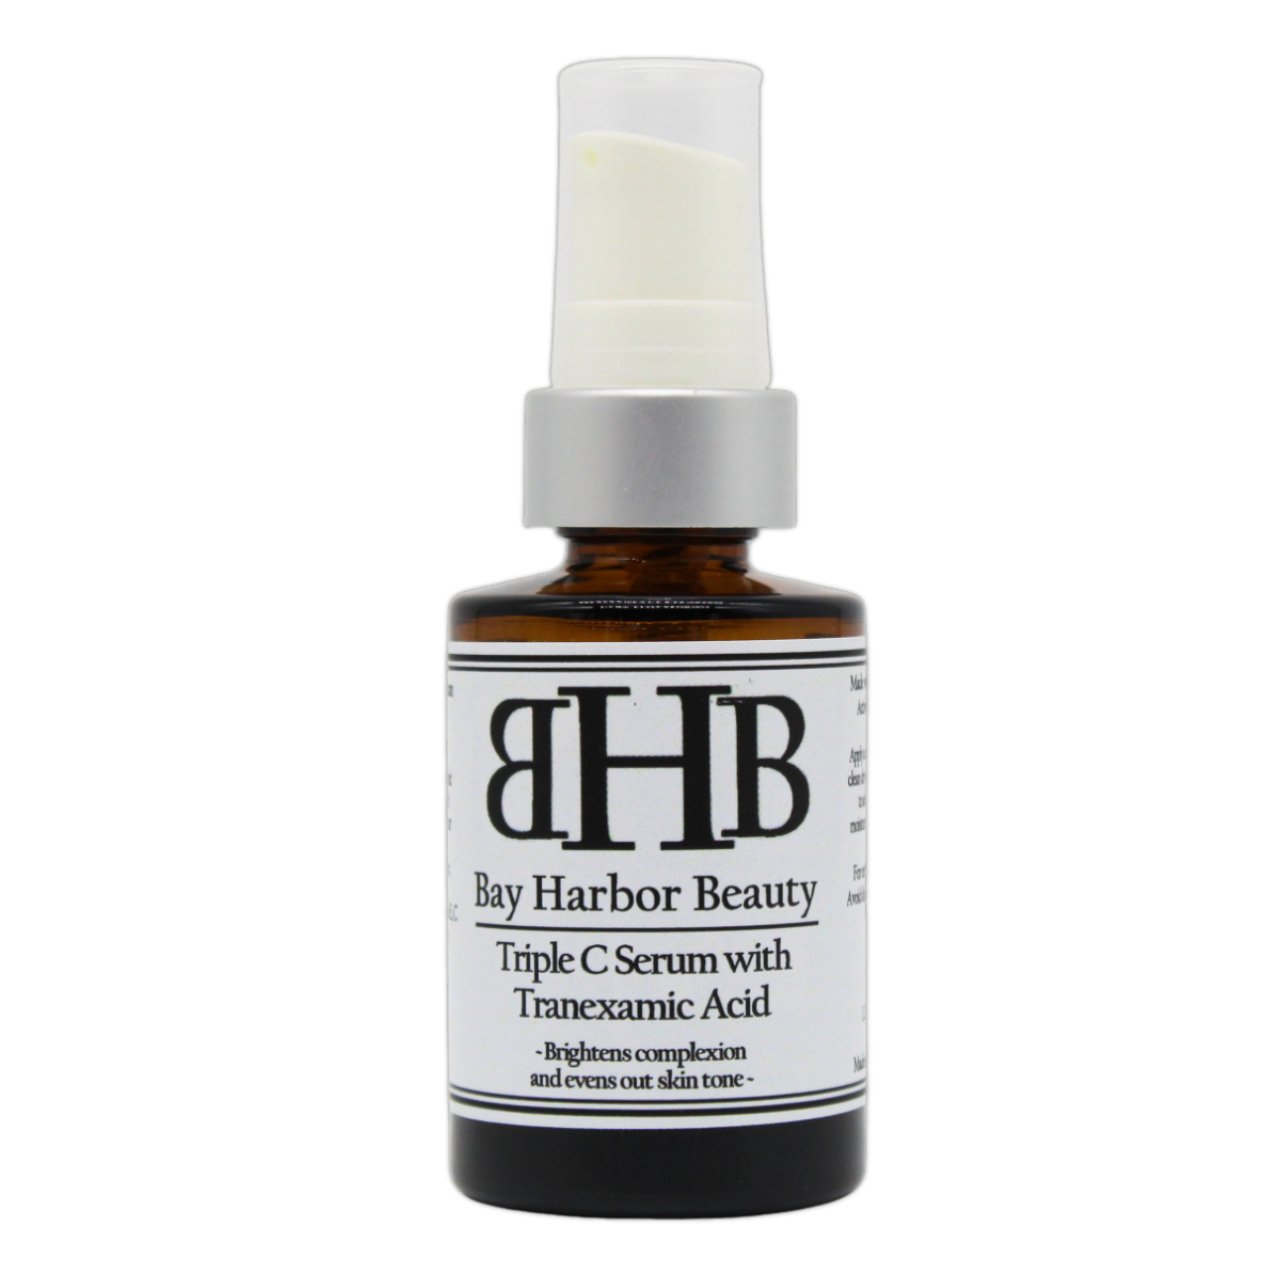 Triple C Serum with Tranexamic Acid - Bay Harbor Beauty